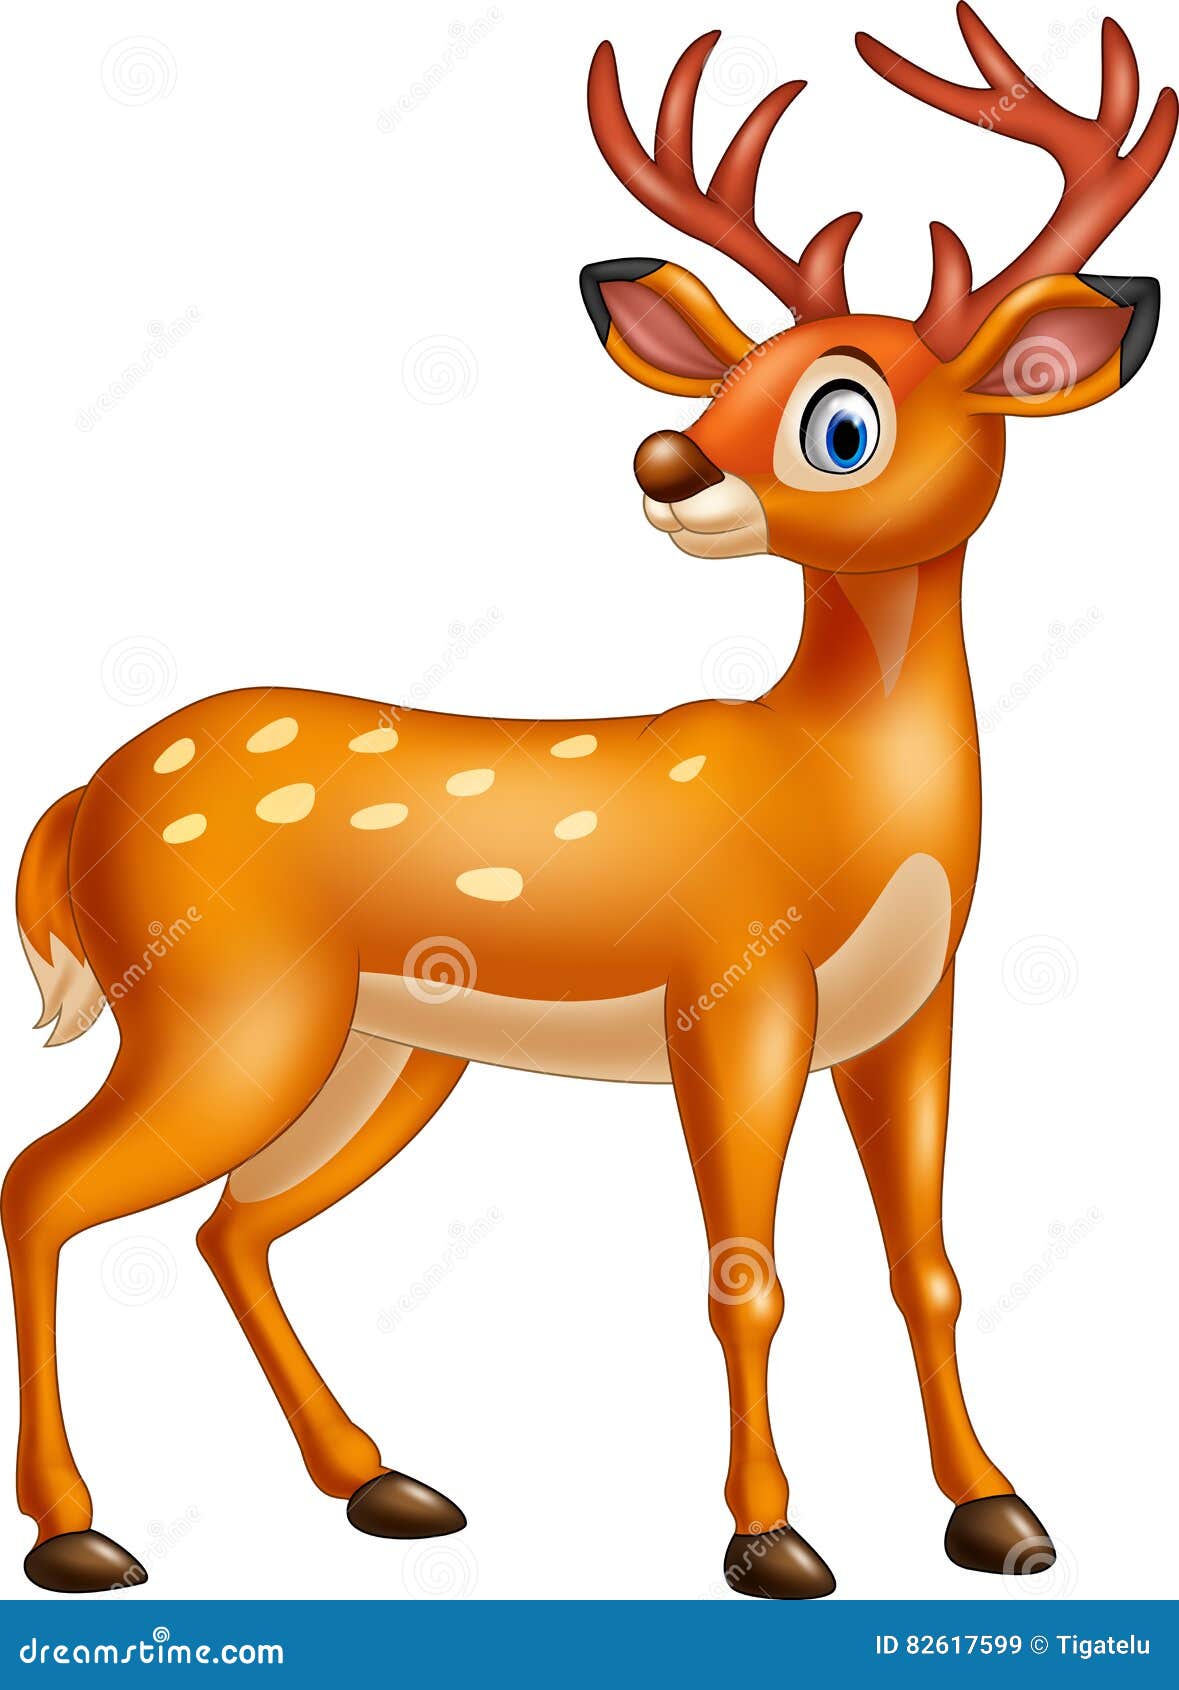 Cute deer cartoon stock vector. Illustration of humor - 82617599